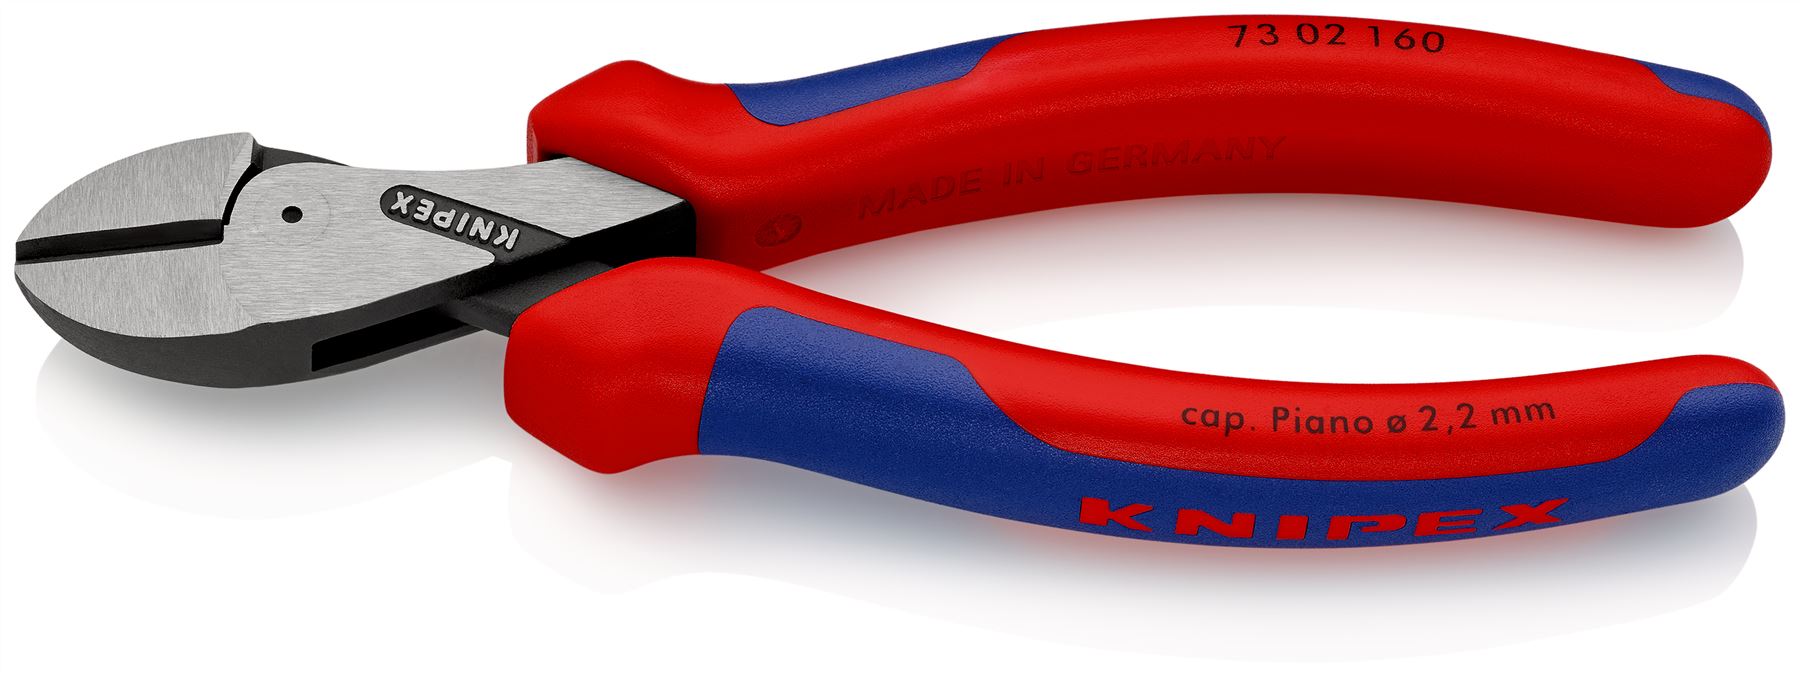 Knipex X-Cut Diagonal Side Cutting Pliers 160mm Multi Component Grips Black Atramentized 73 02 160